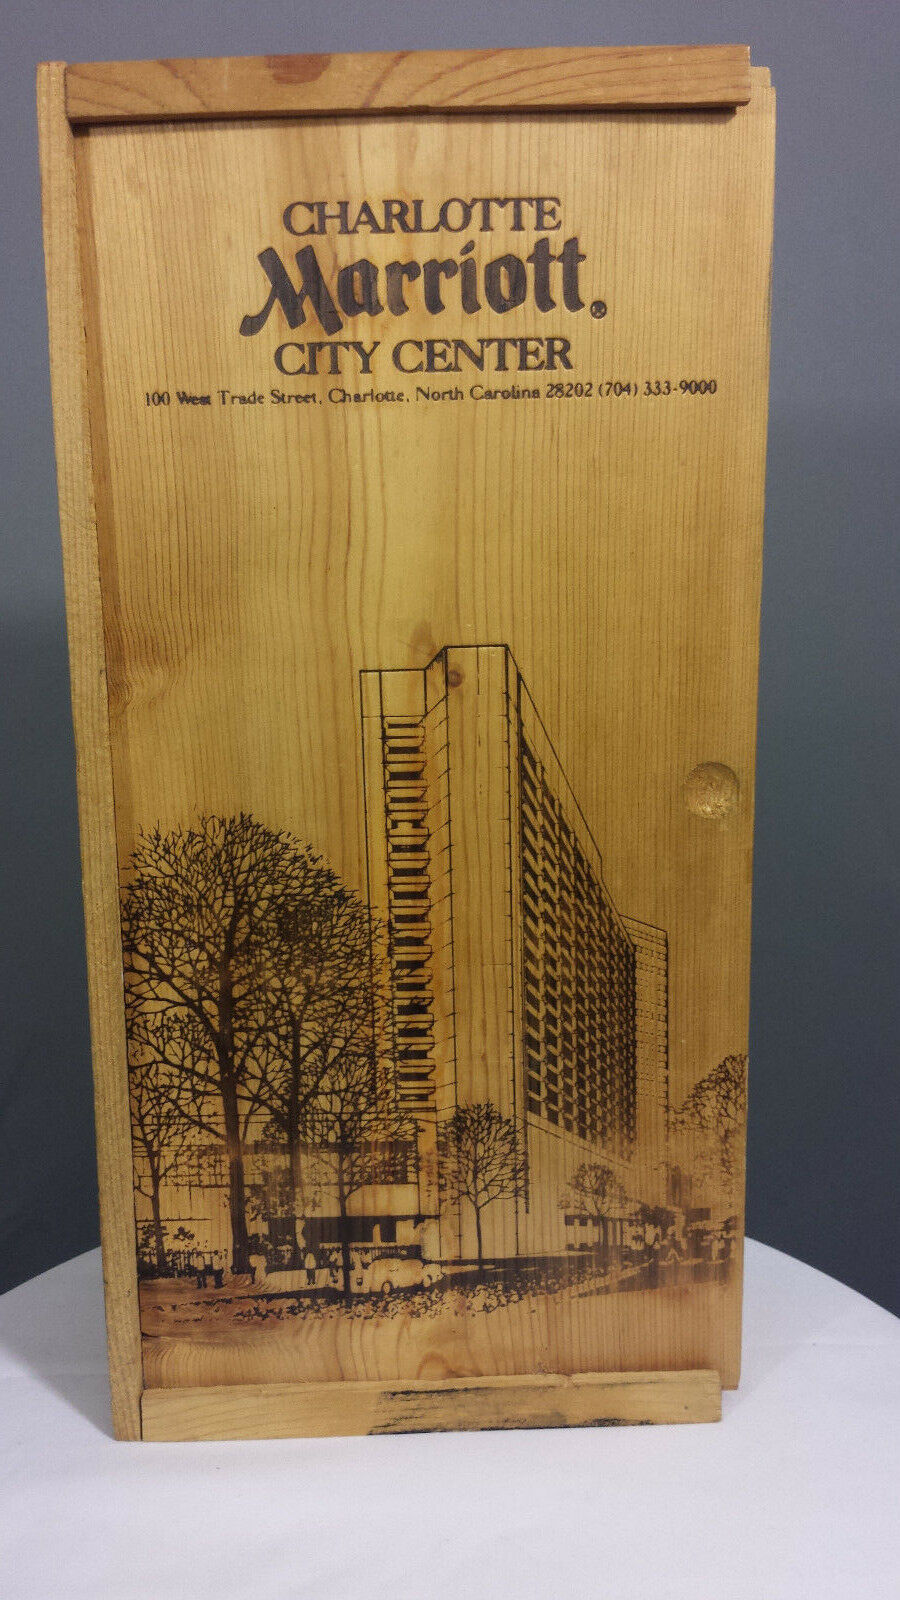 Charlotte Marriott City Center Wooden Wine Box Bottle Size Crate